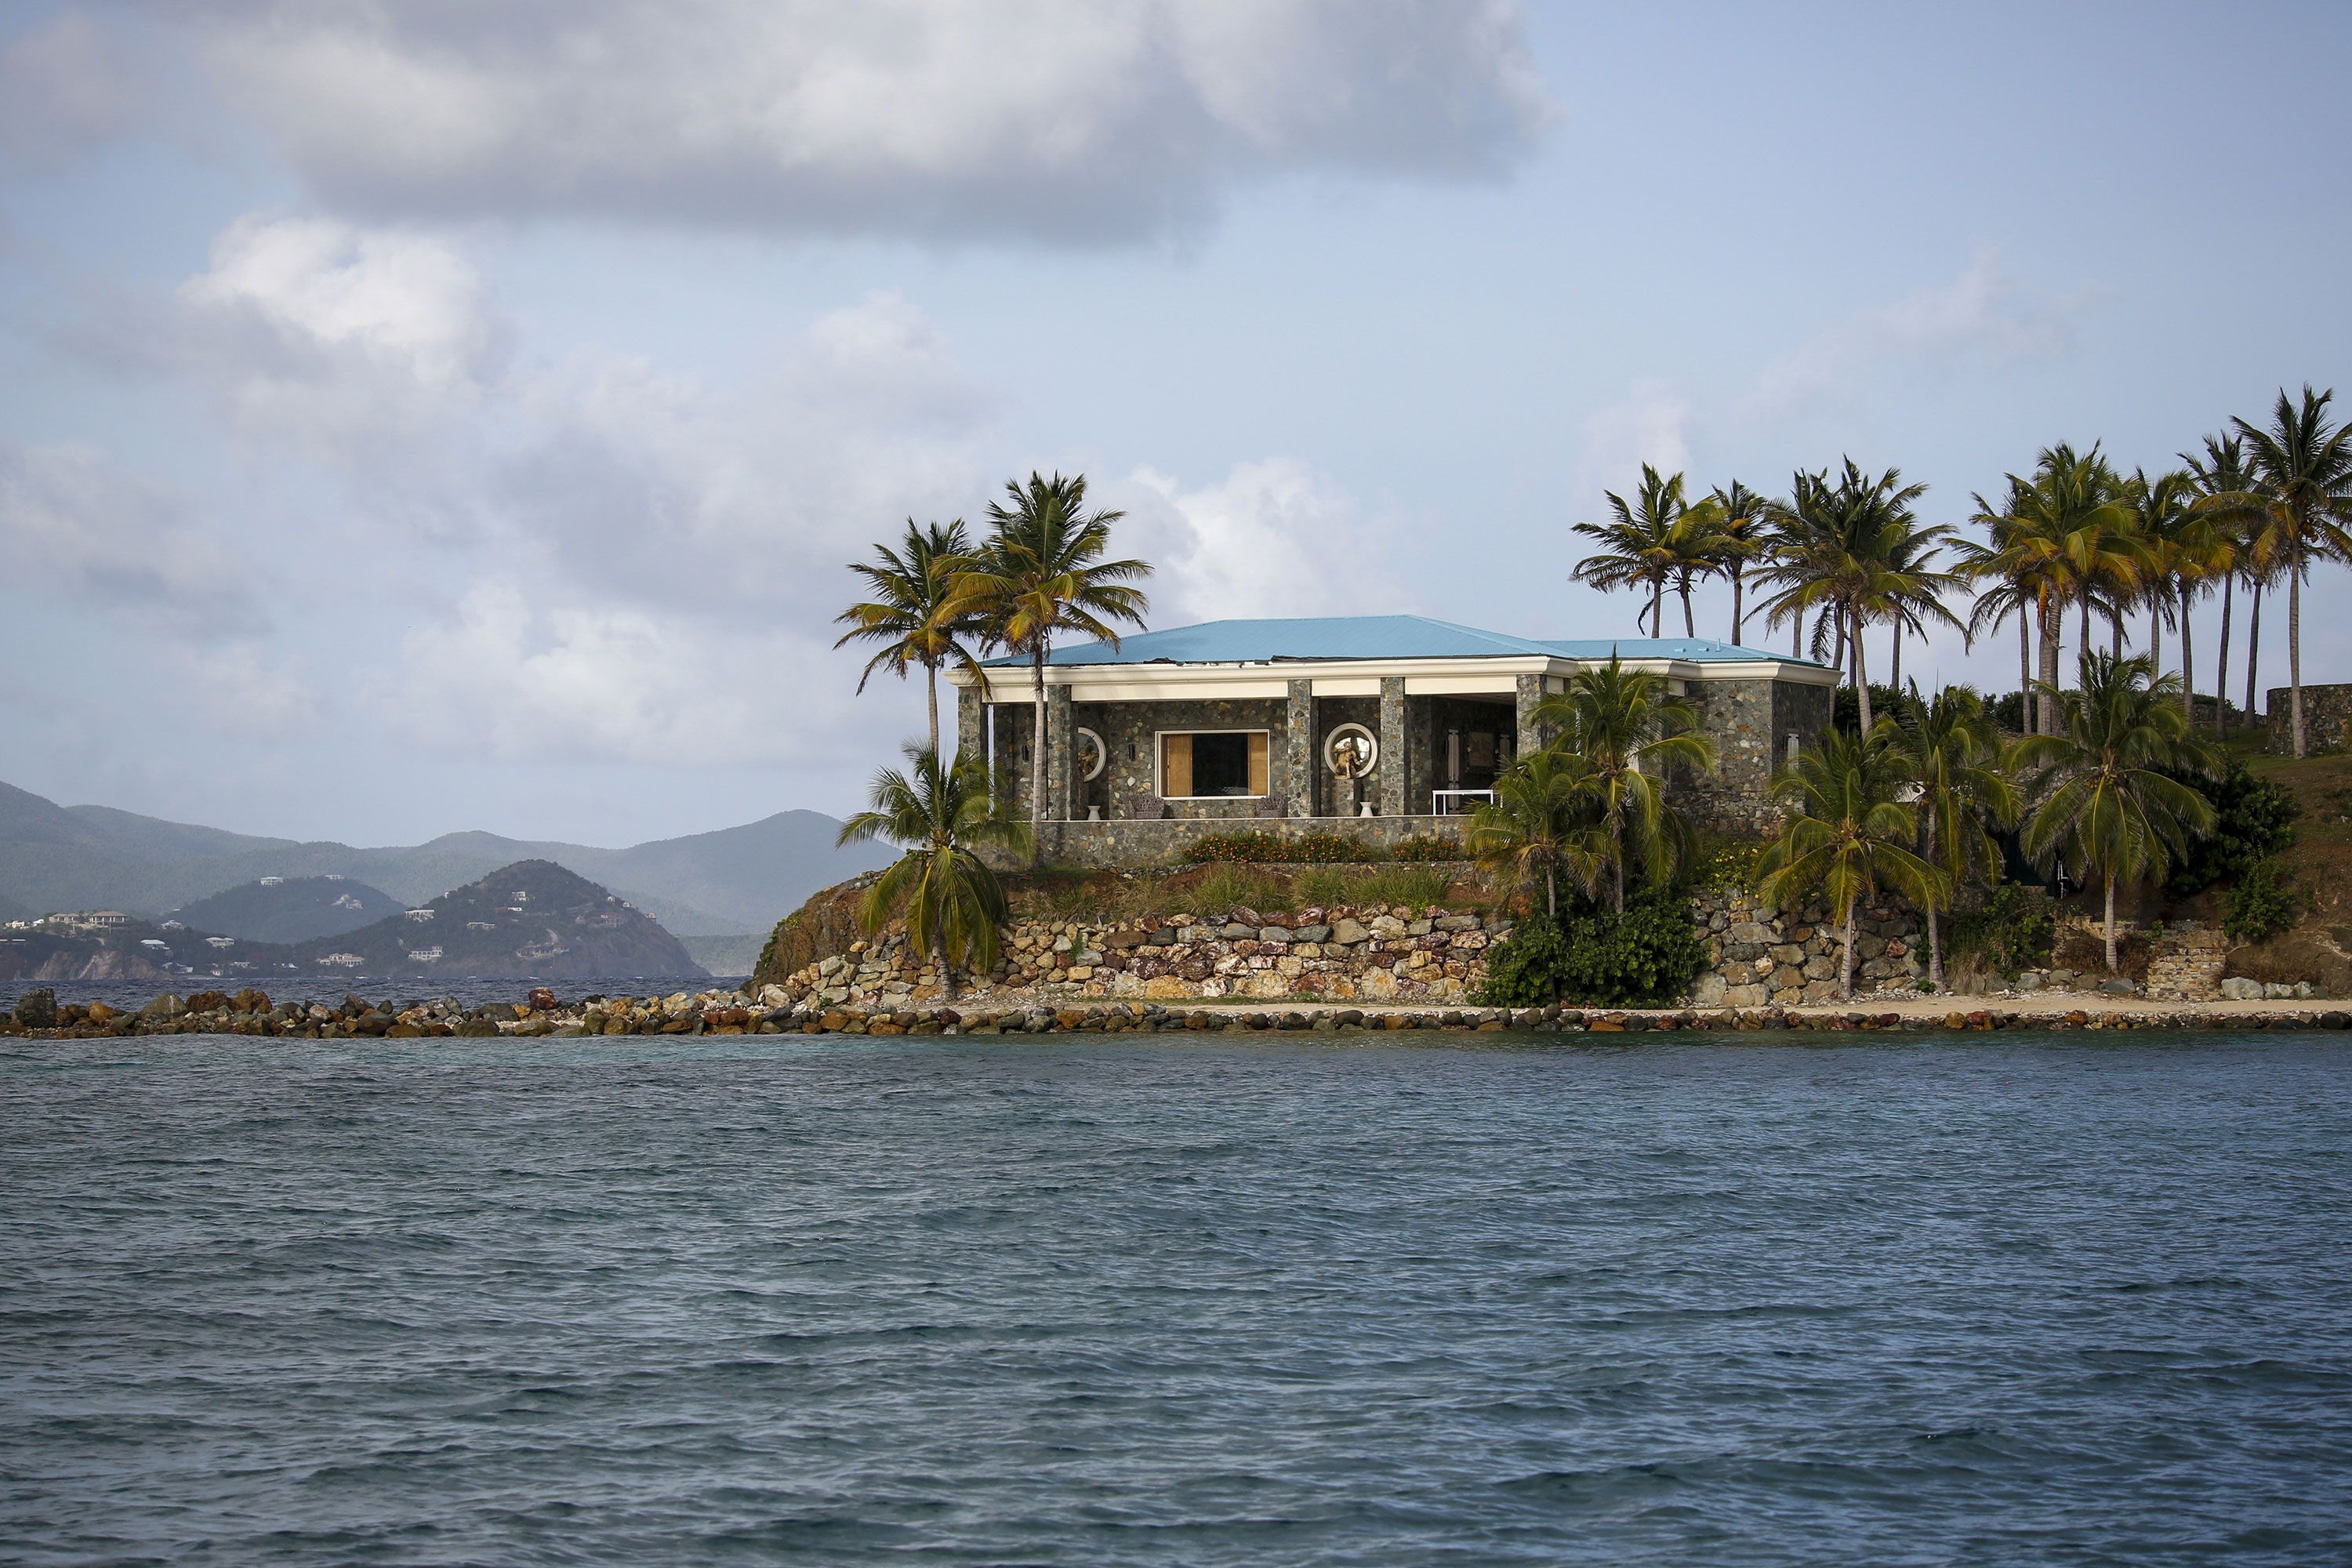 Jeffrey Epsteins Caribbean Islands Becoming a Luxury Resort